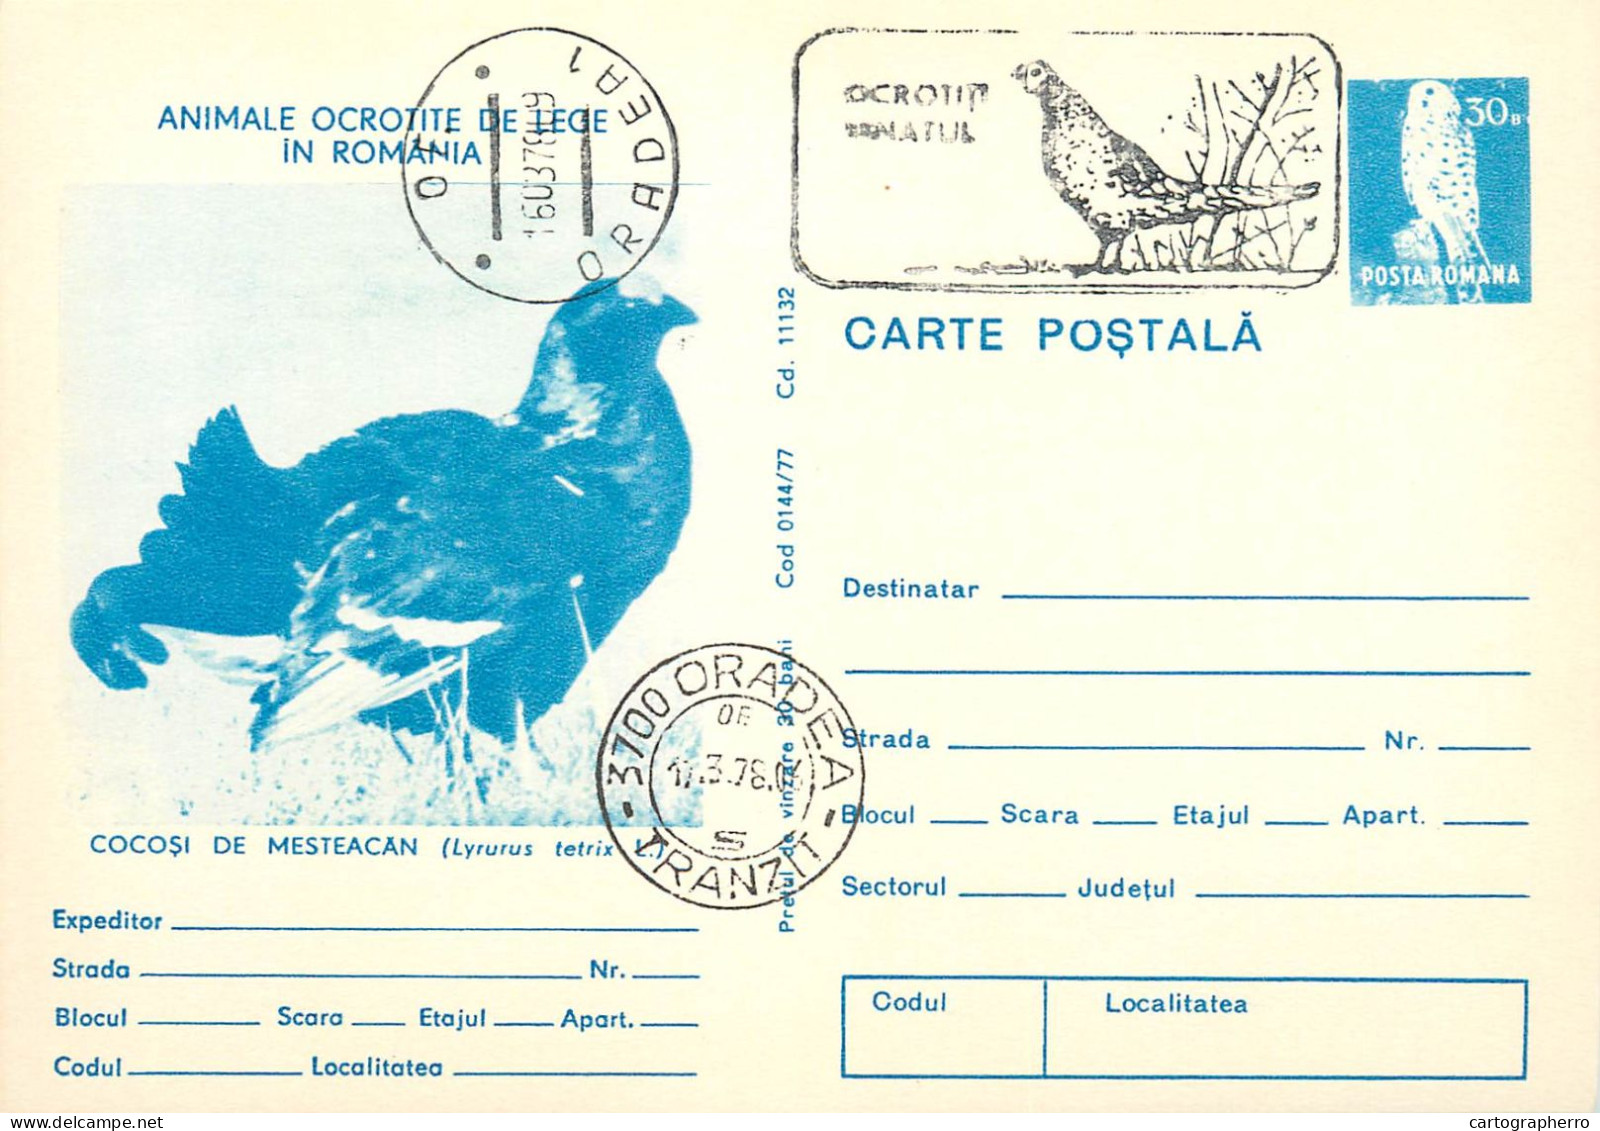 Animale ocrotite de lege in Romania stationery postcards set of 20